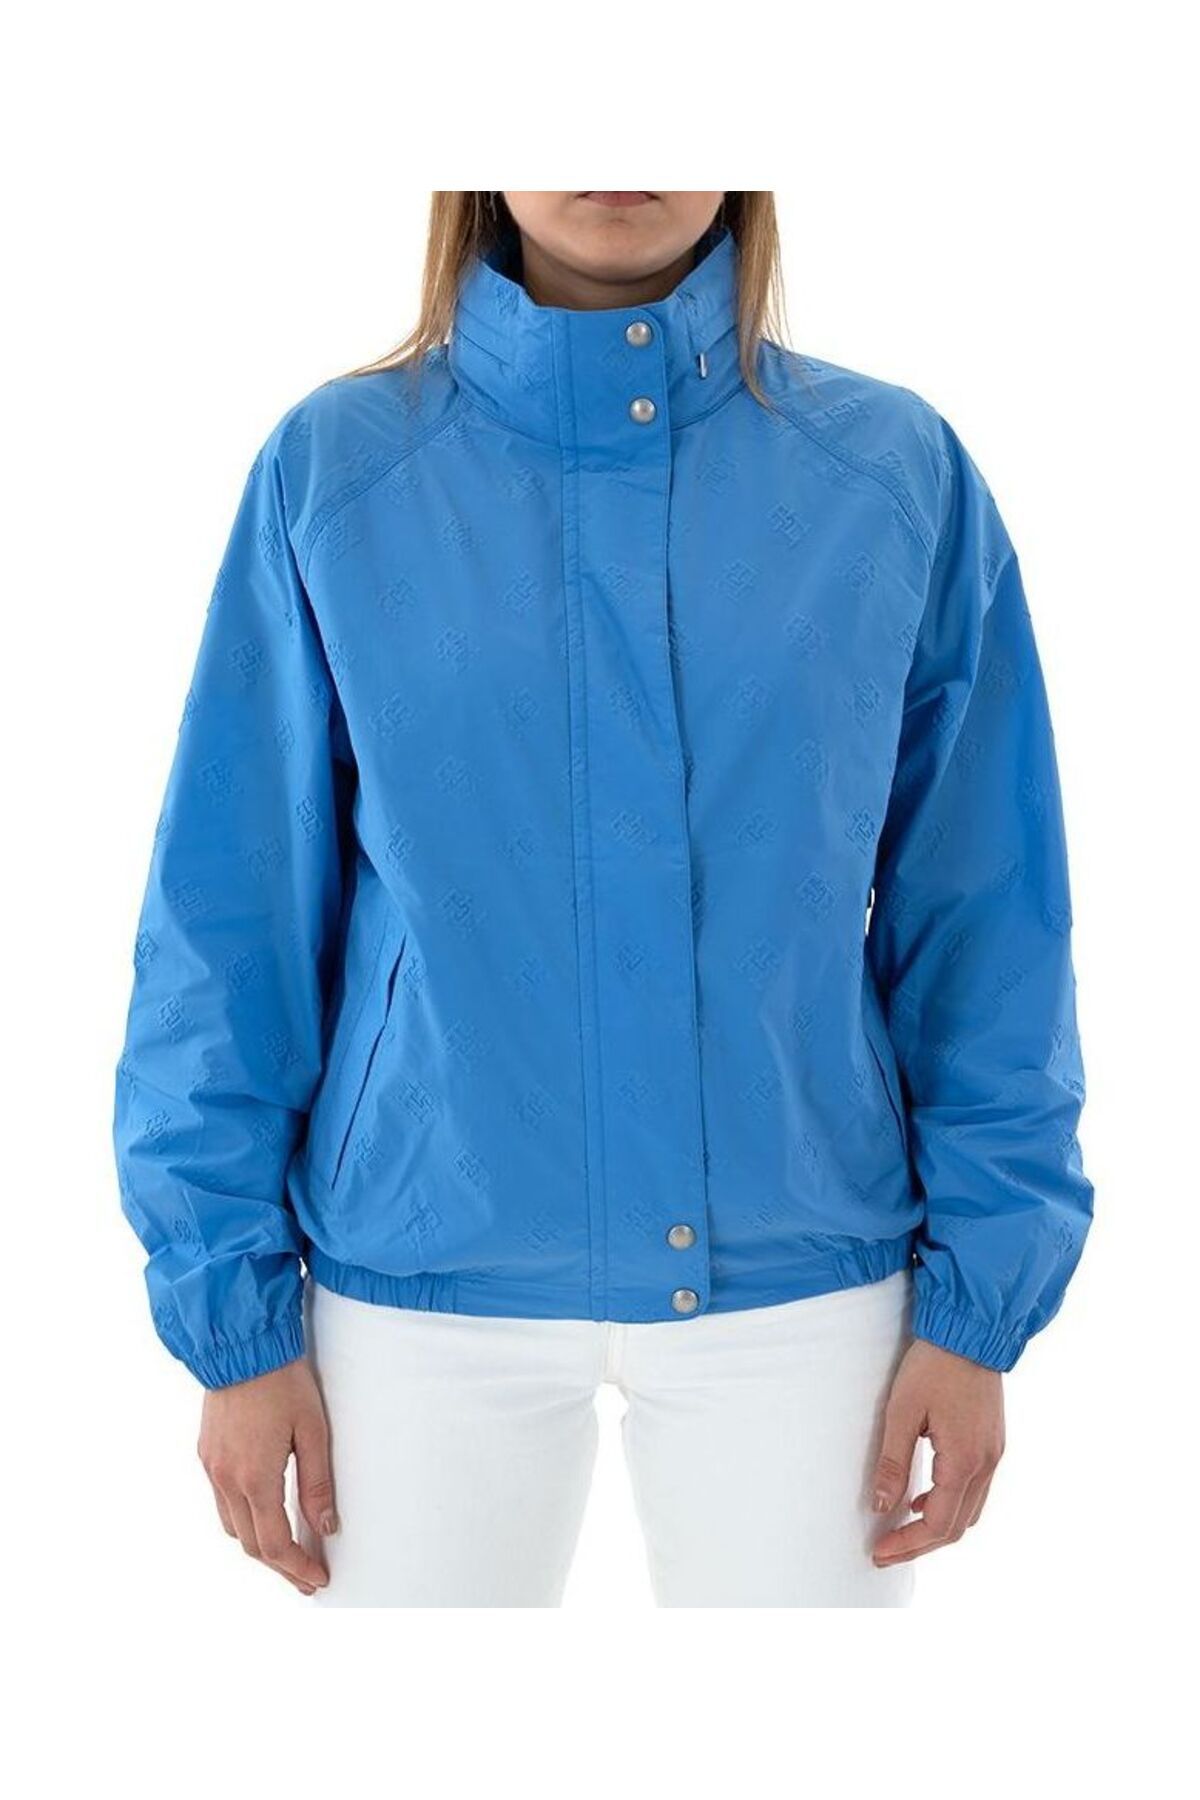 Tommy Hilfiger Kadın Marka Logo Detaylı Regular Fit Uzun Kollu Mavi Ceket WW0WW41554-C30